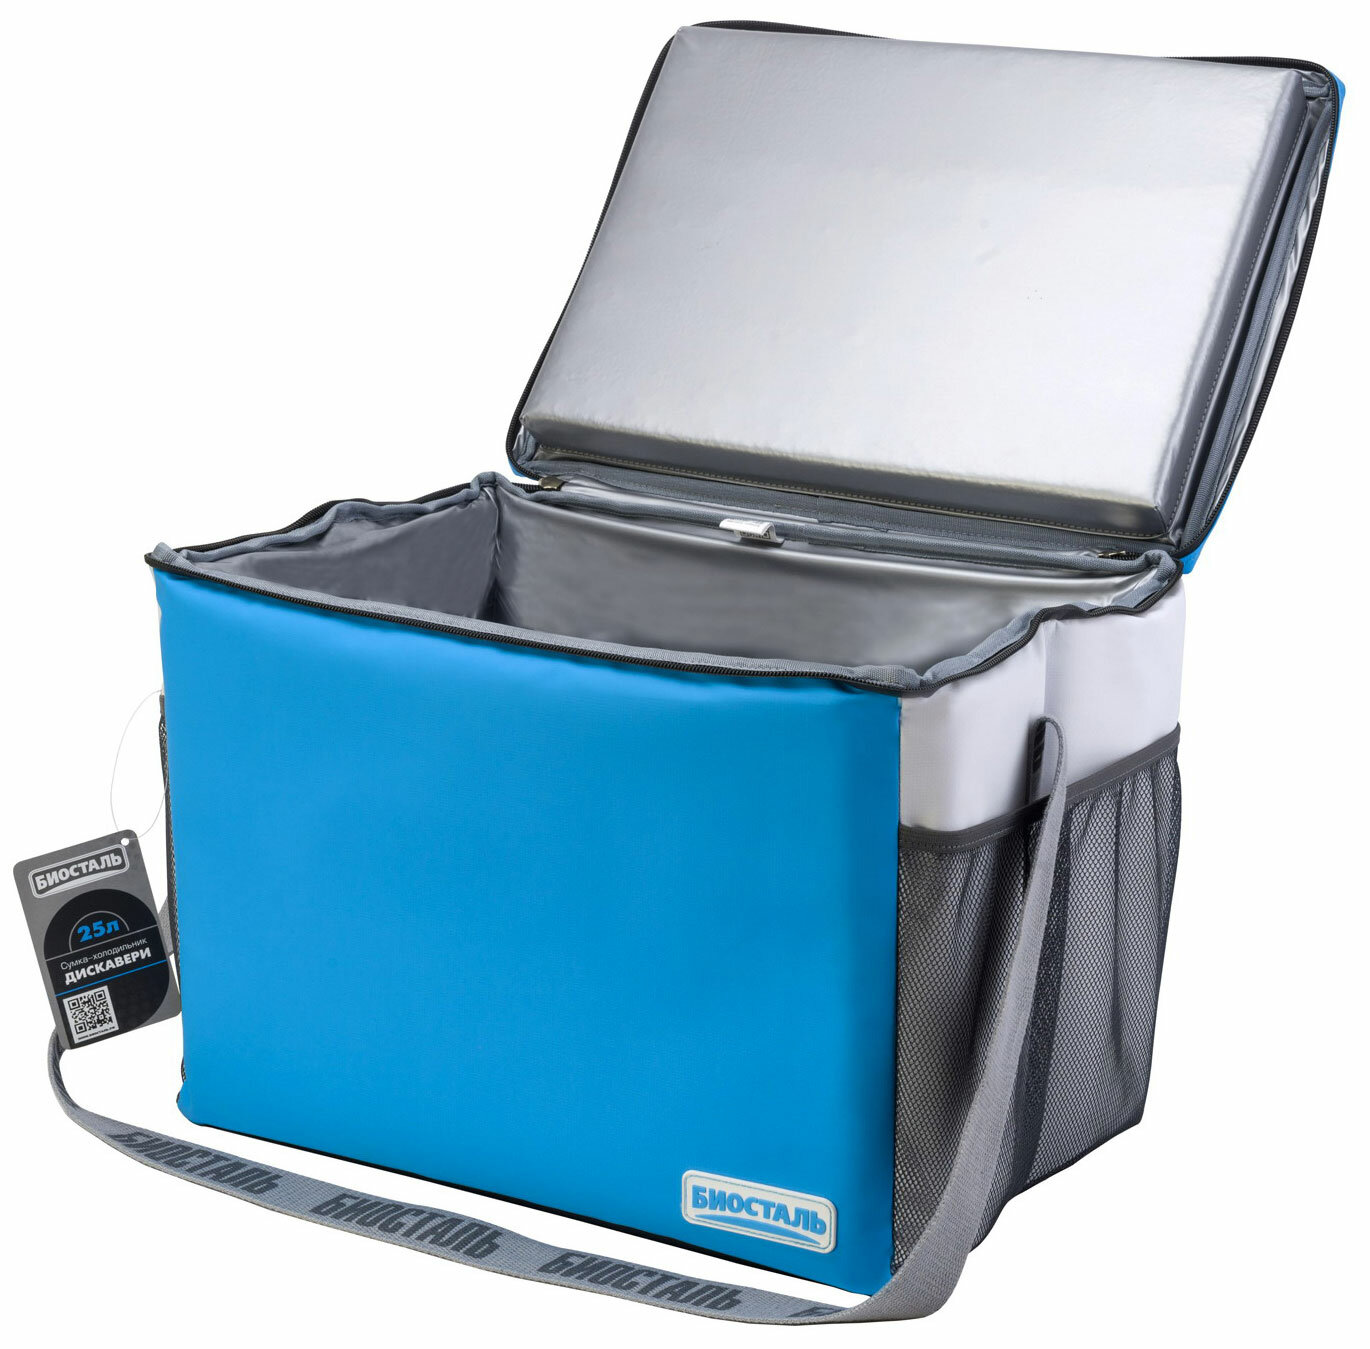 Термосумка Biostal Дискавери (25 л.), синяя TCР-25B сумка холодильник biostal дискавери 20 л серая tcр 20g z